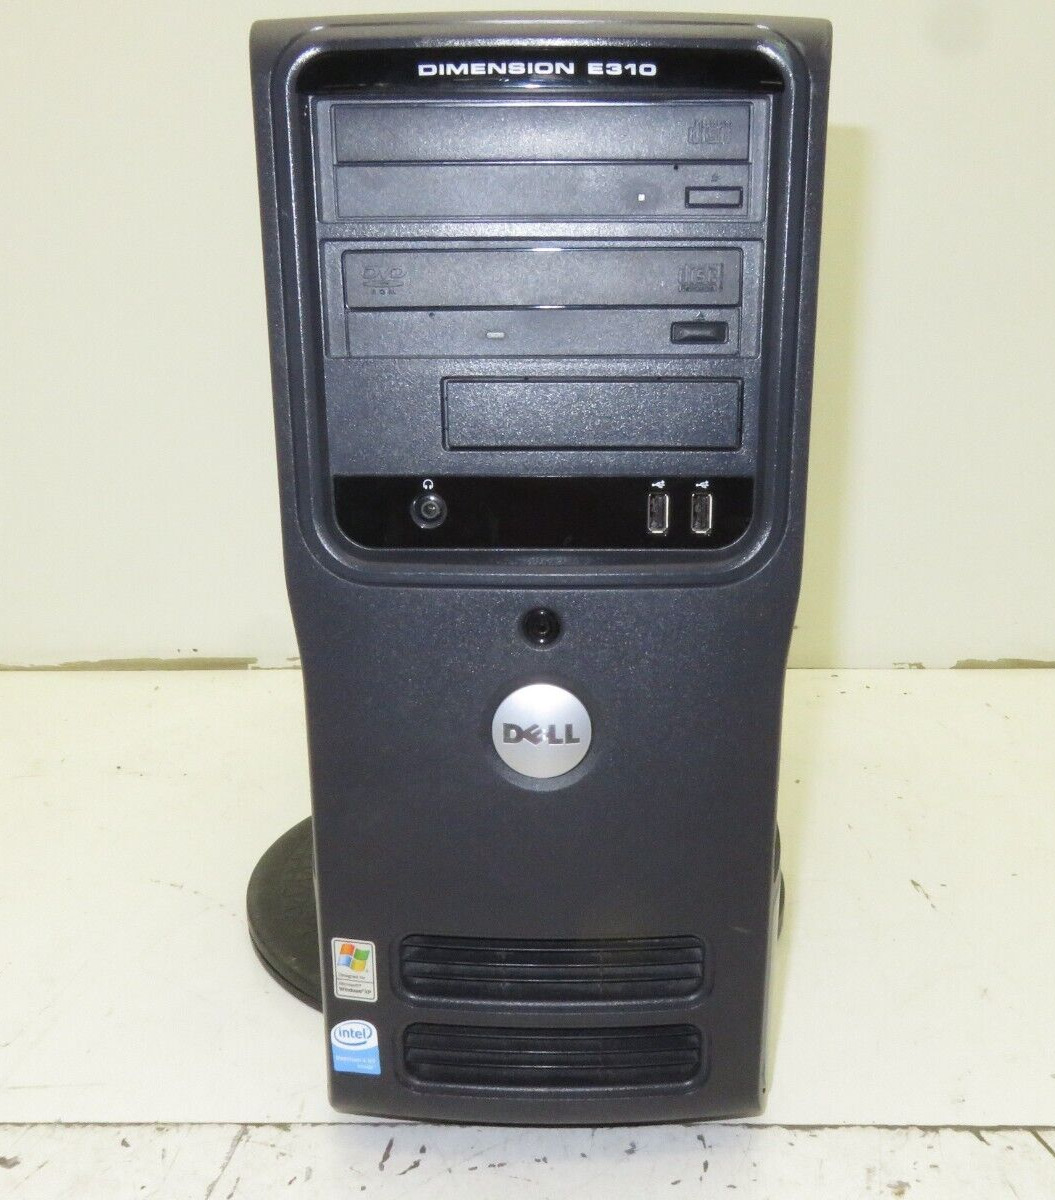 Dell Dimension E310 Desktop Computer Intel Pentium 4 1GB Ram No HDD